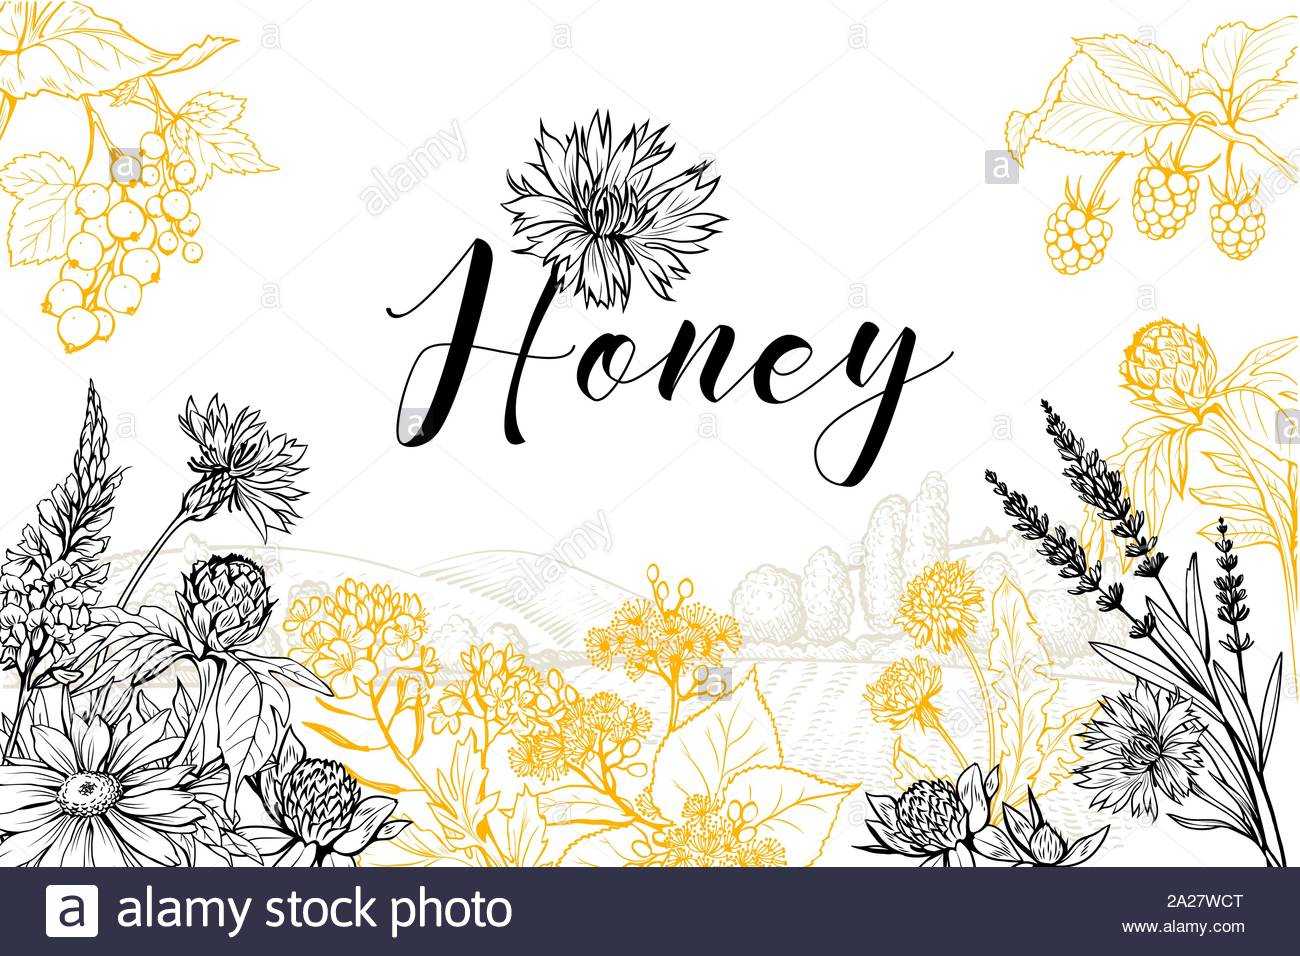 Flower Honey Vector Hand Drawn Banner Template. Natural Regarding Homemade Banner Template